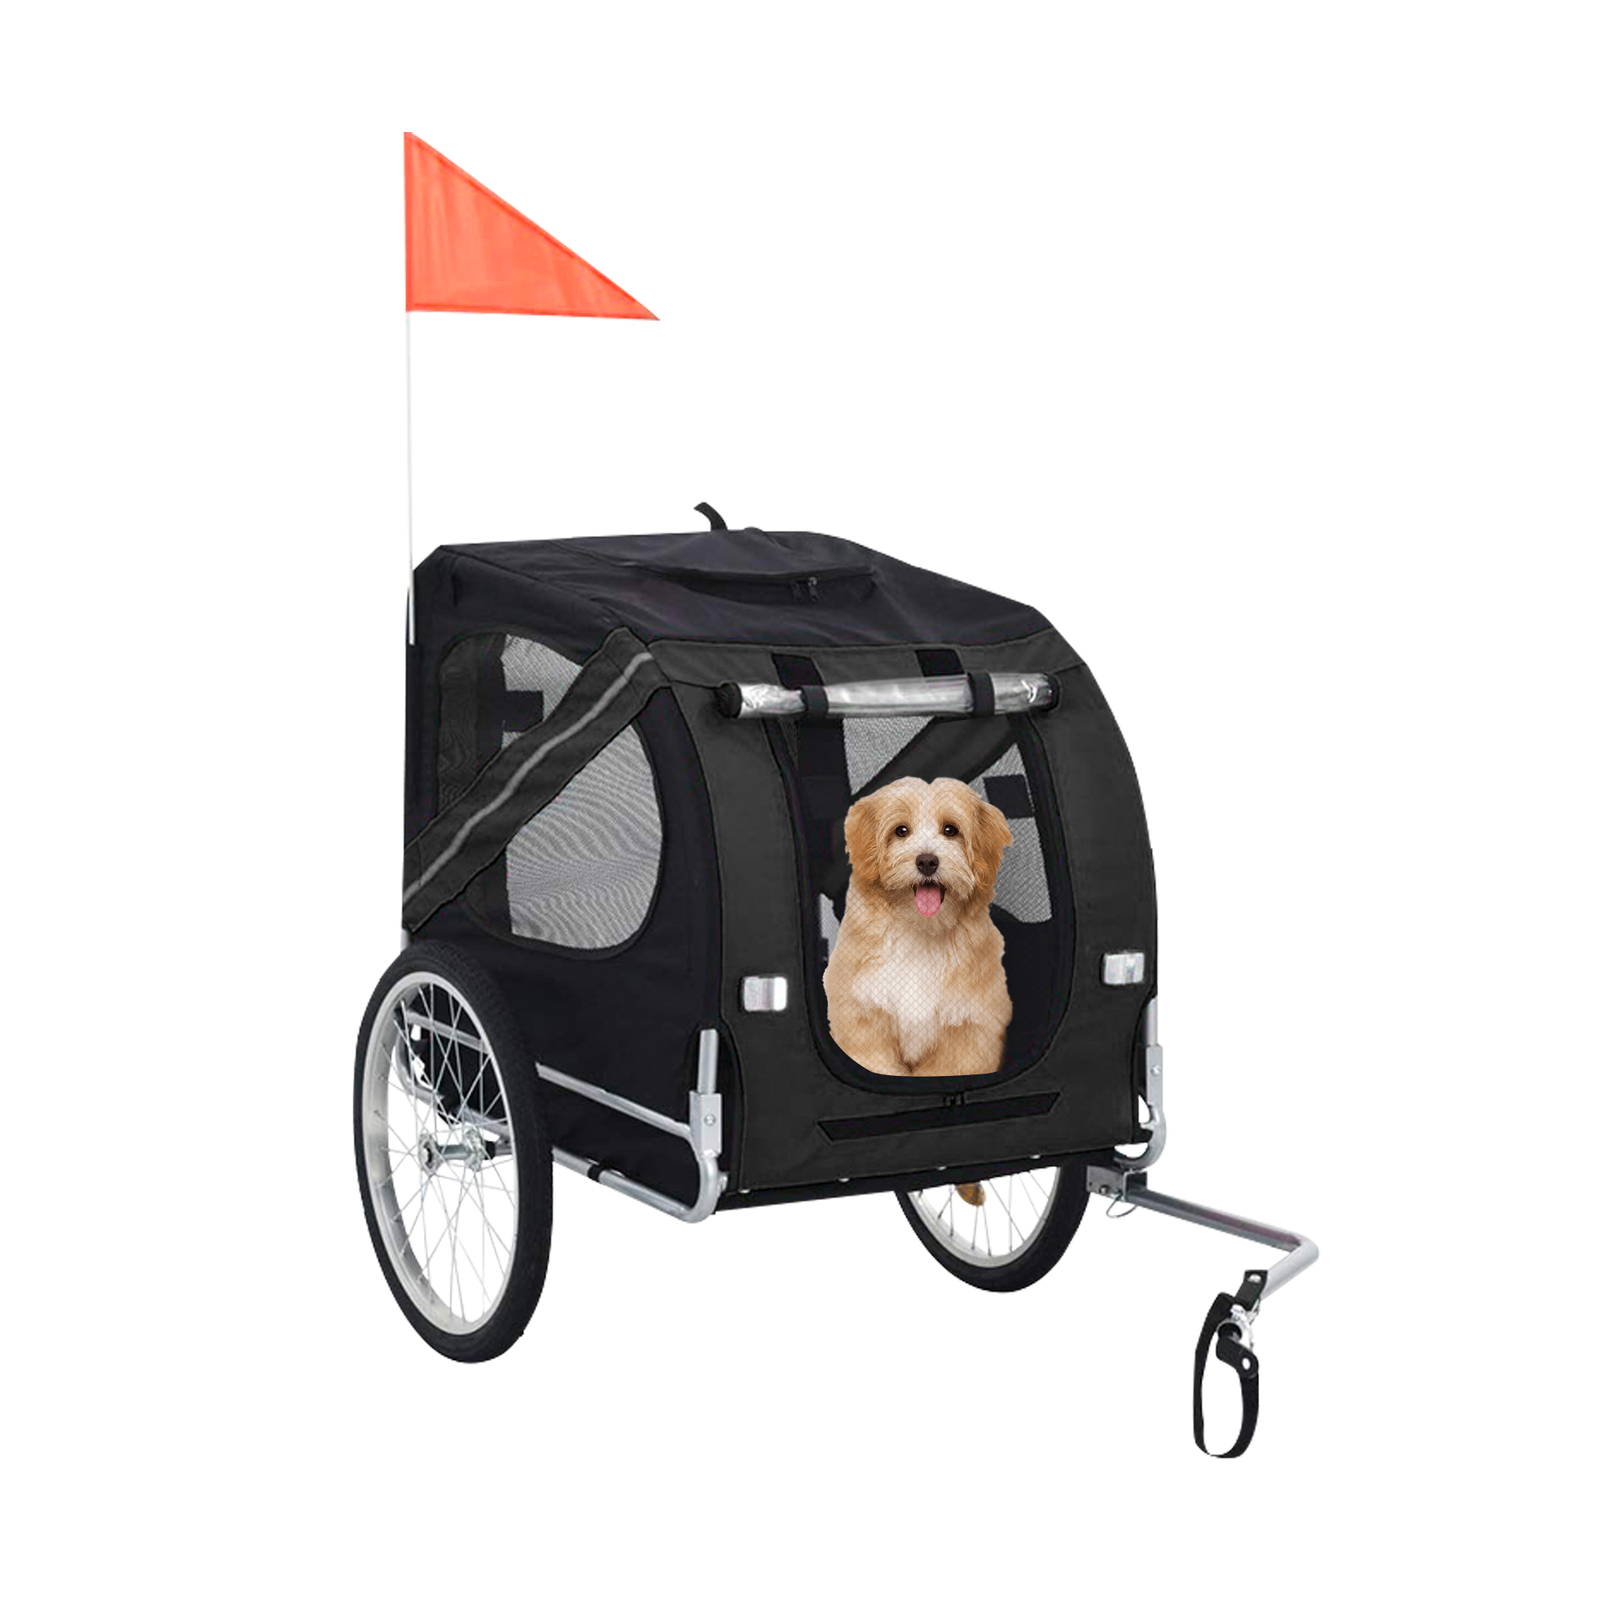 Pet Bike Stroller Bicycle Trailer Pram Pet Jogger Dog Cat Small to Medium Size - Black